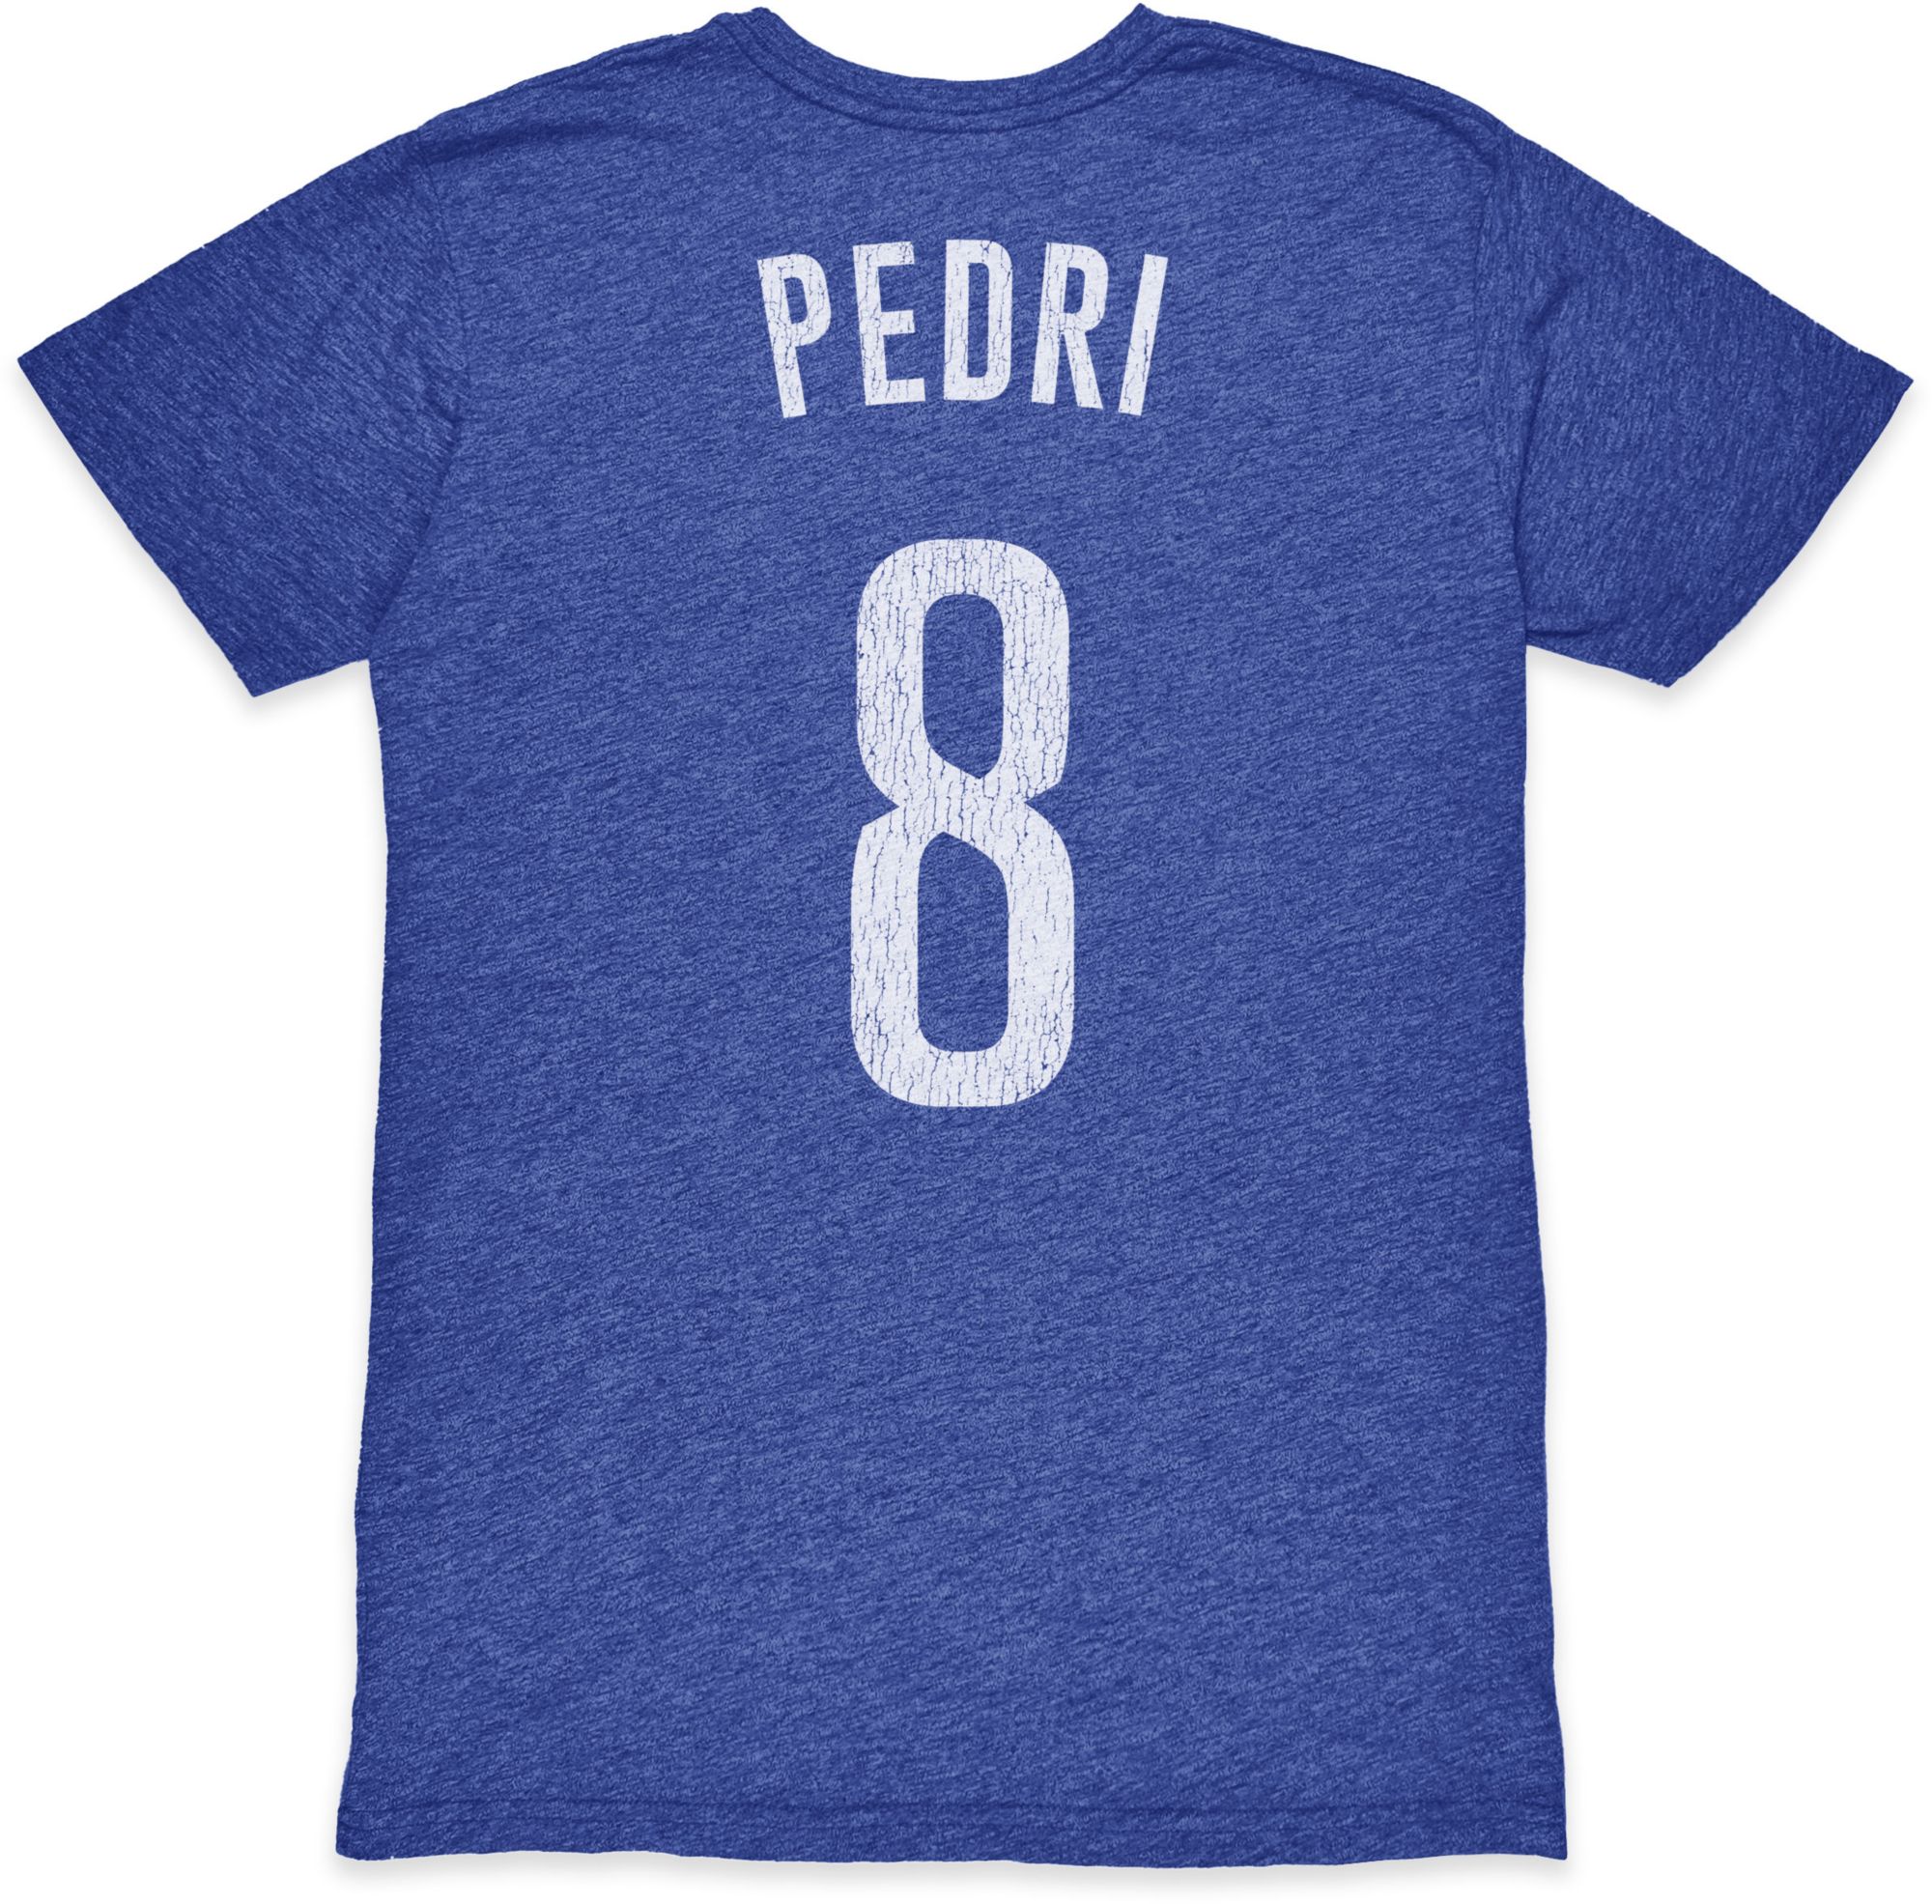 1863 FC Barcelona Pedri #8 Blue T-Shirt